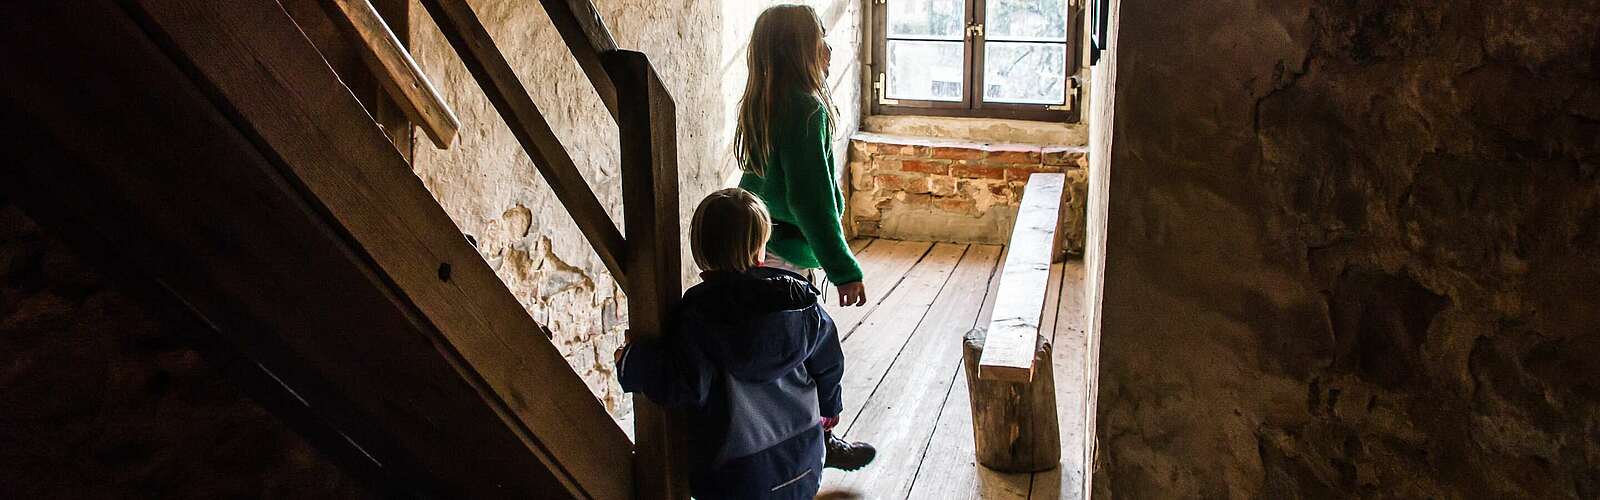 Kinder auf Burg Rabenstein,
        
    

        Foto: TMB-Fotoarchiv/Geertje Jacob